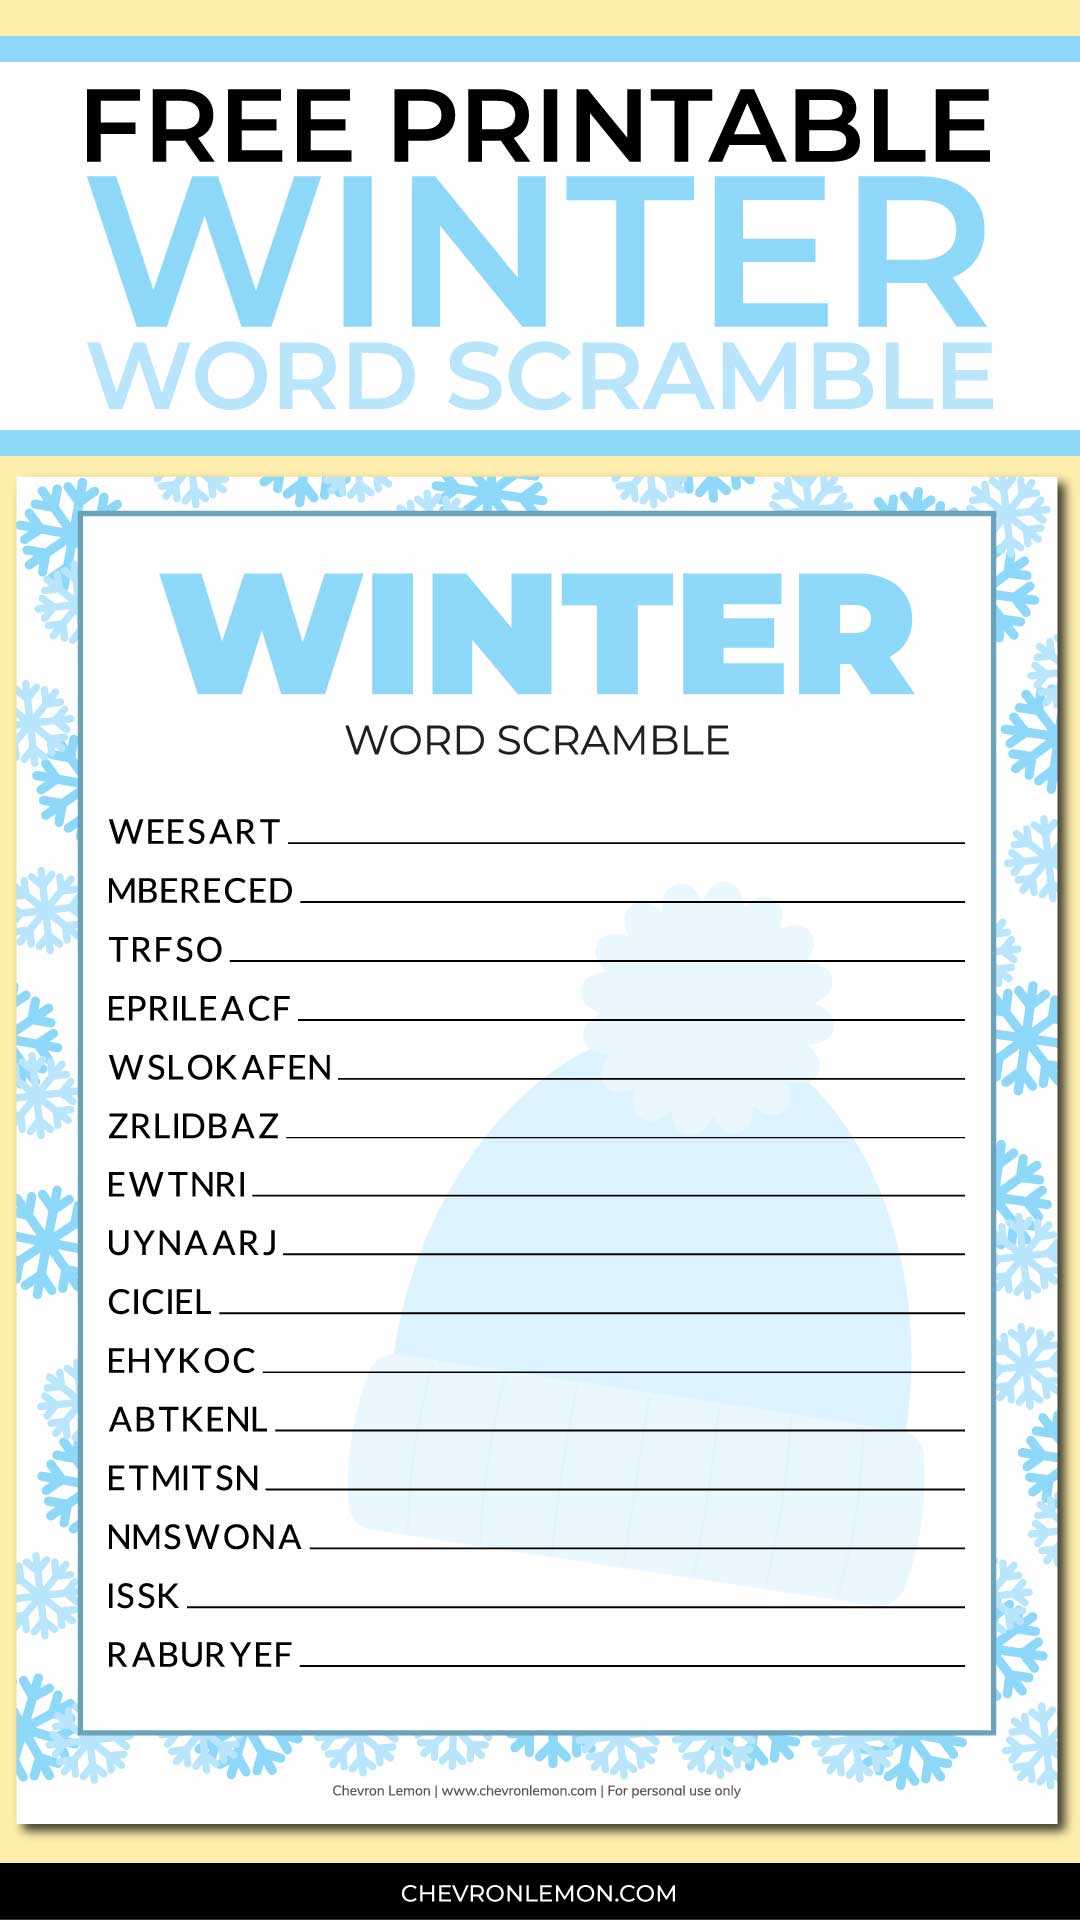 Printable winter word scramble